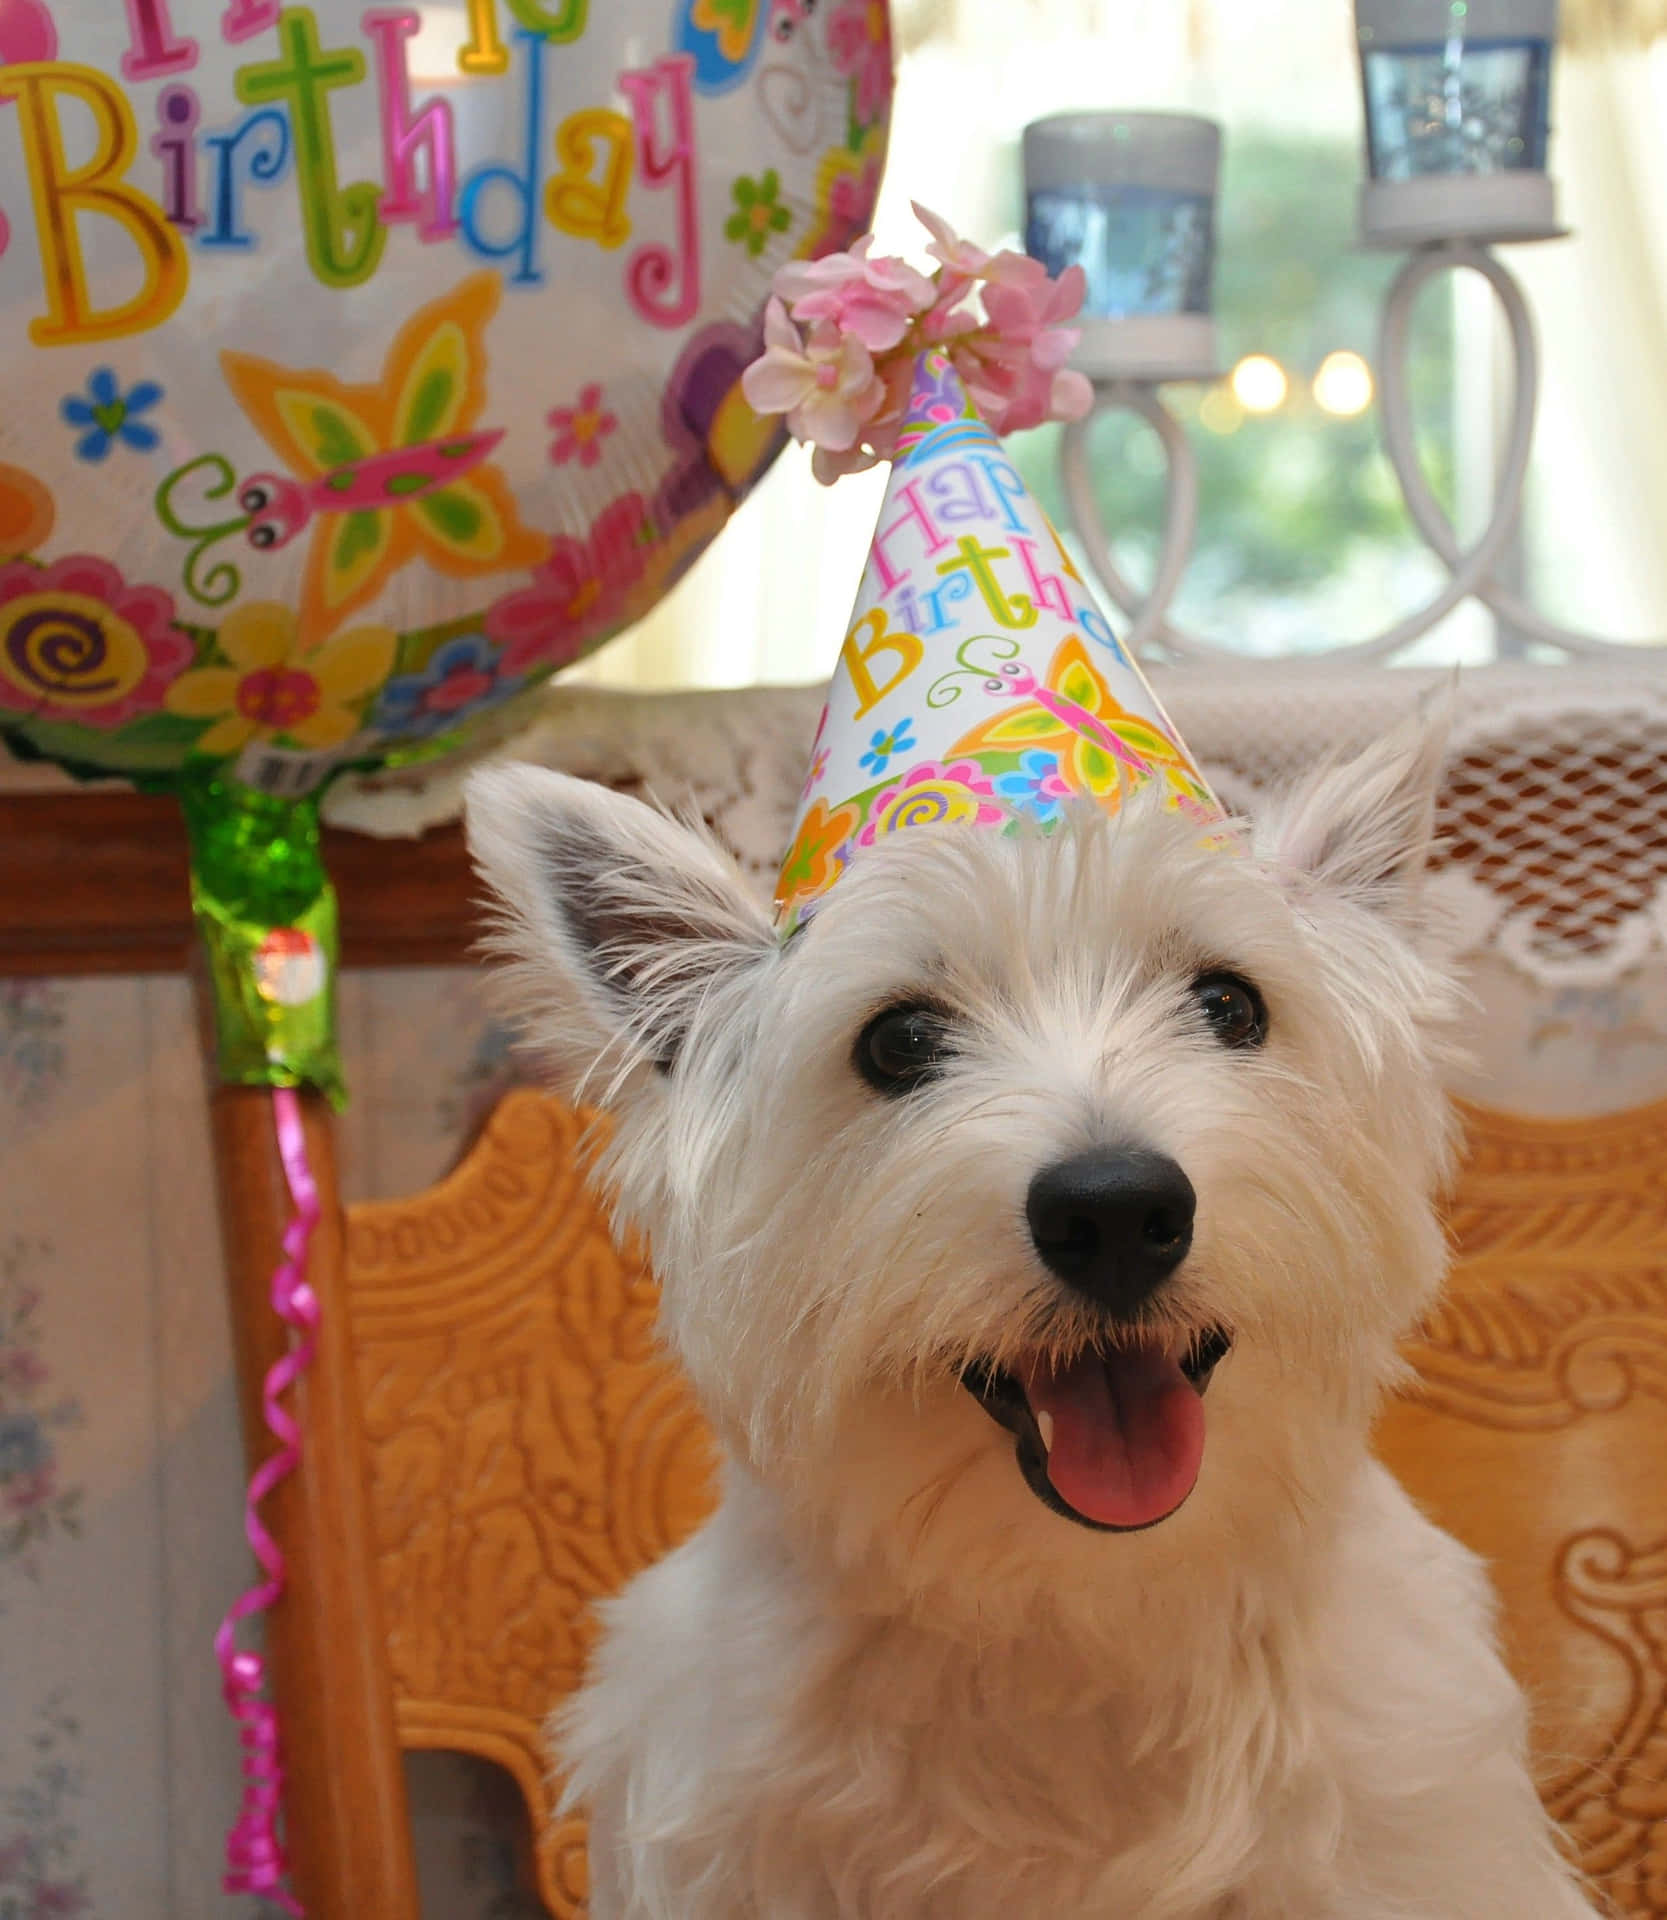 Imagende Una Fiesta De Cumpleaños De Un West Highland White Terrier